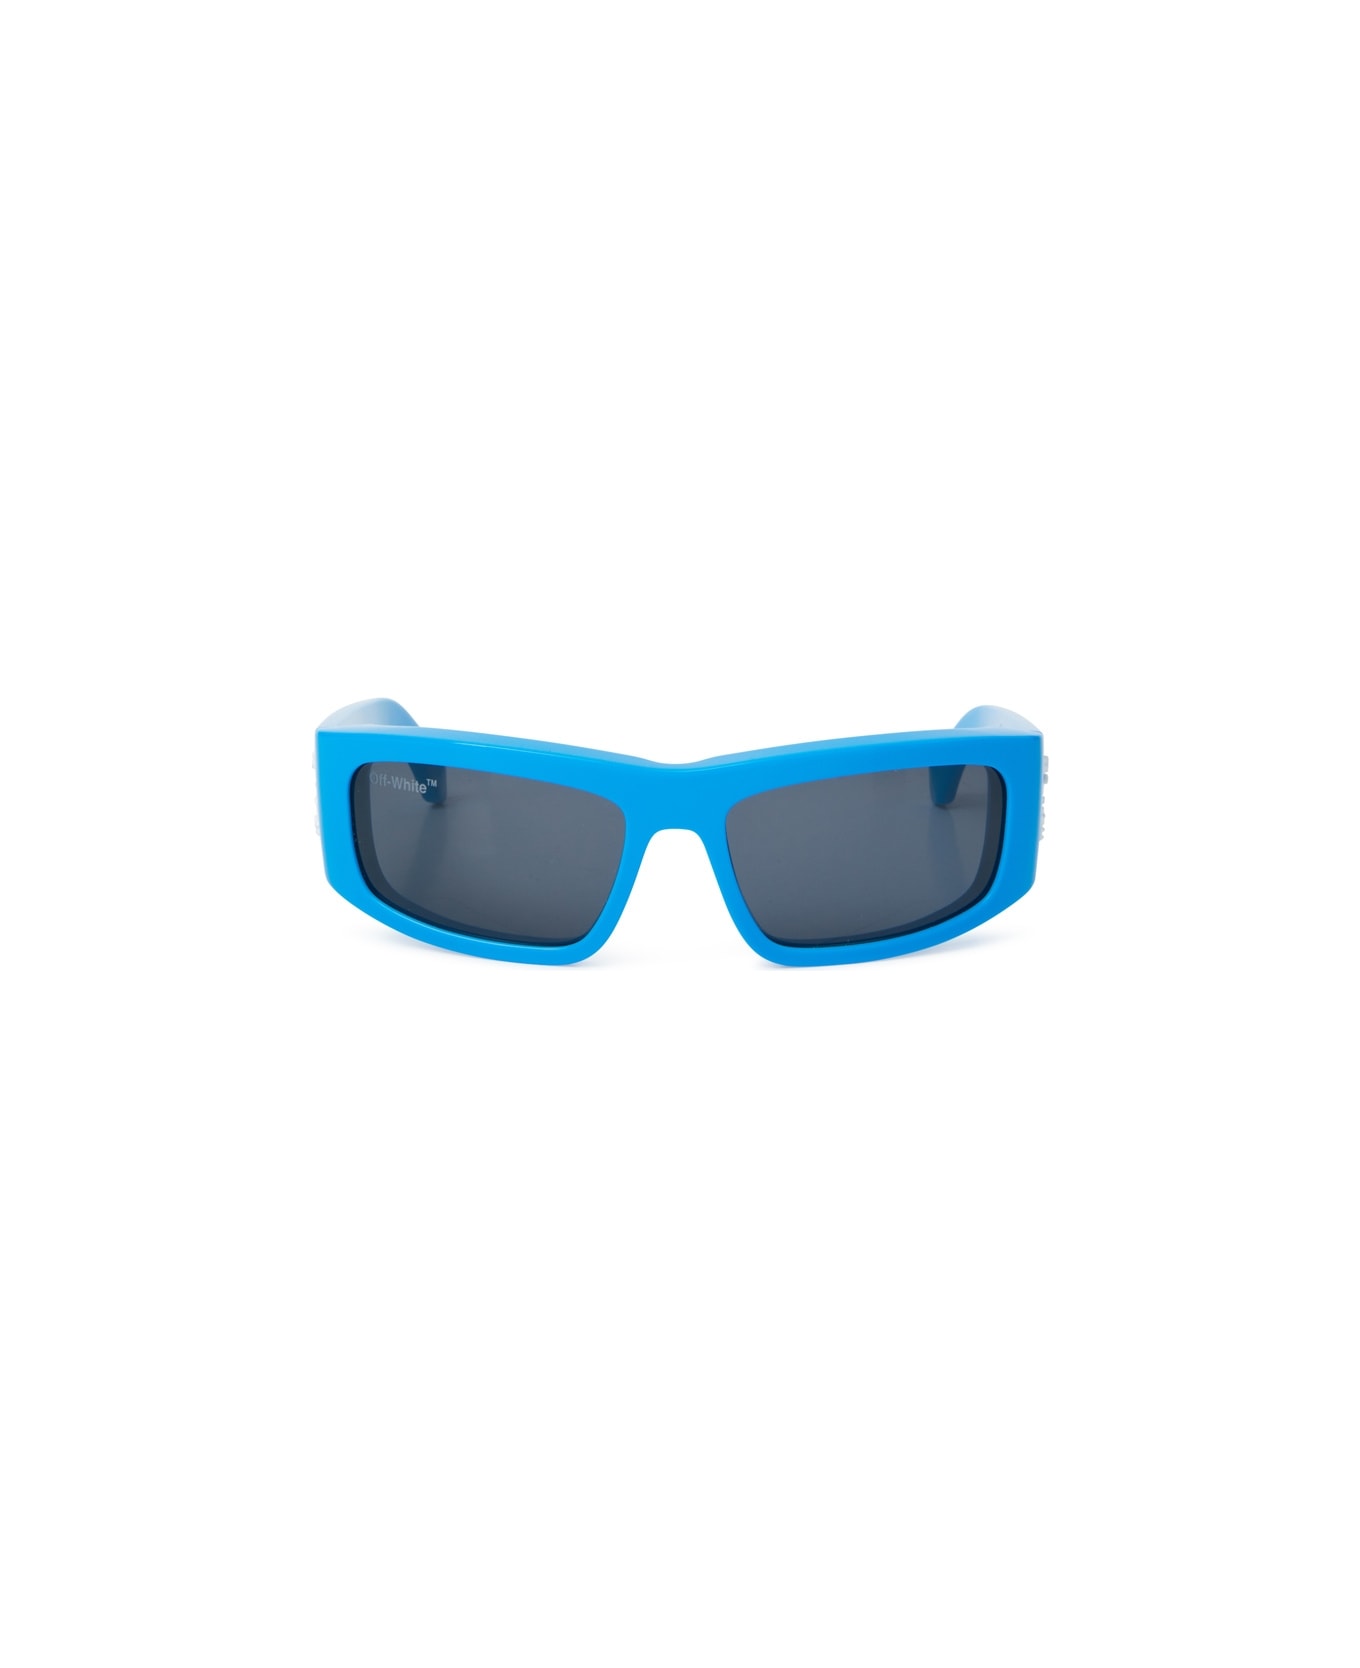 Off-White JOSEPH SUNGLASSES Sunglasses - Blue サングラス